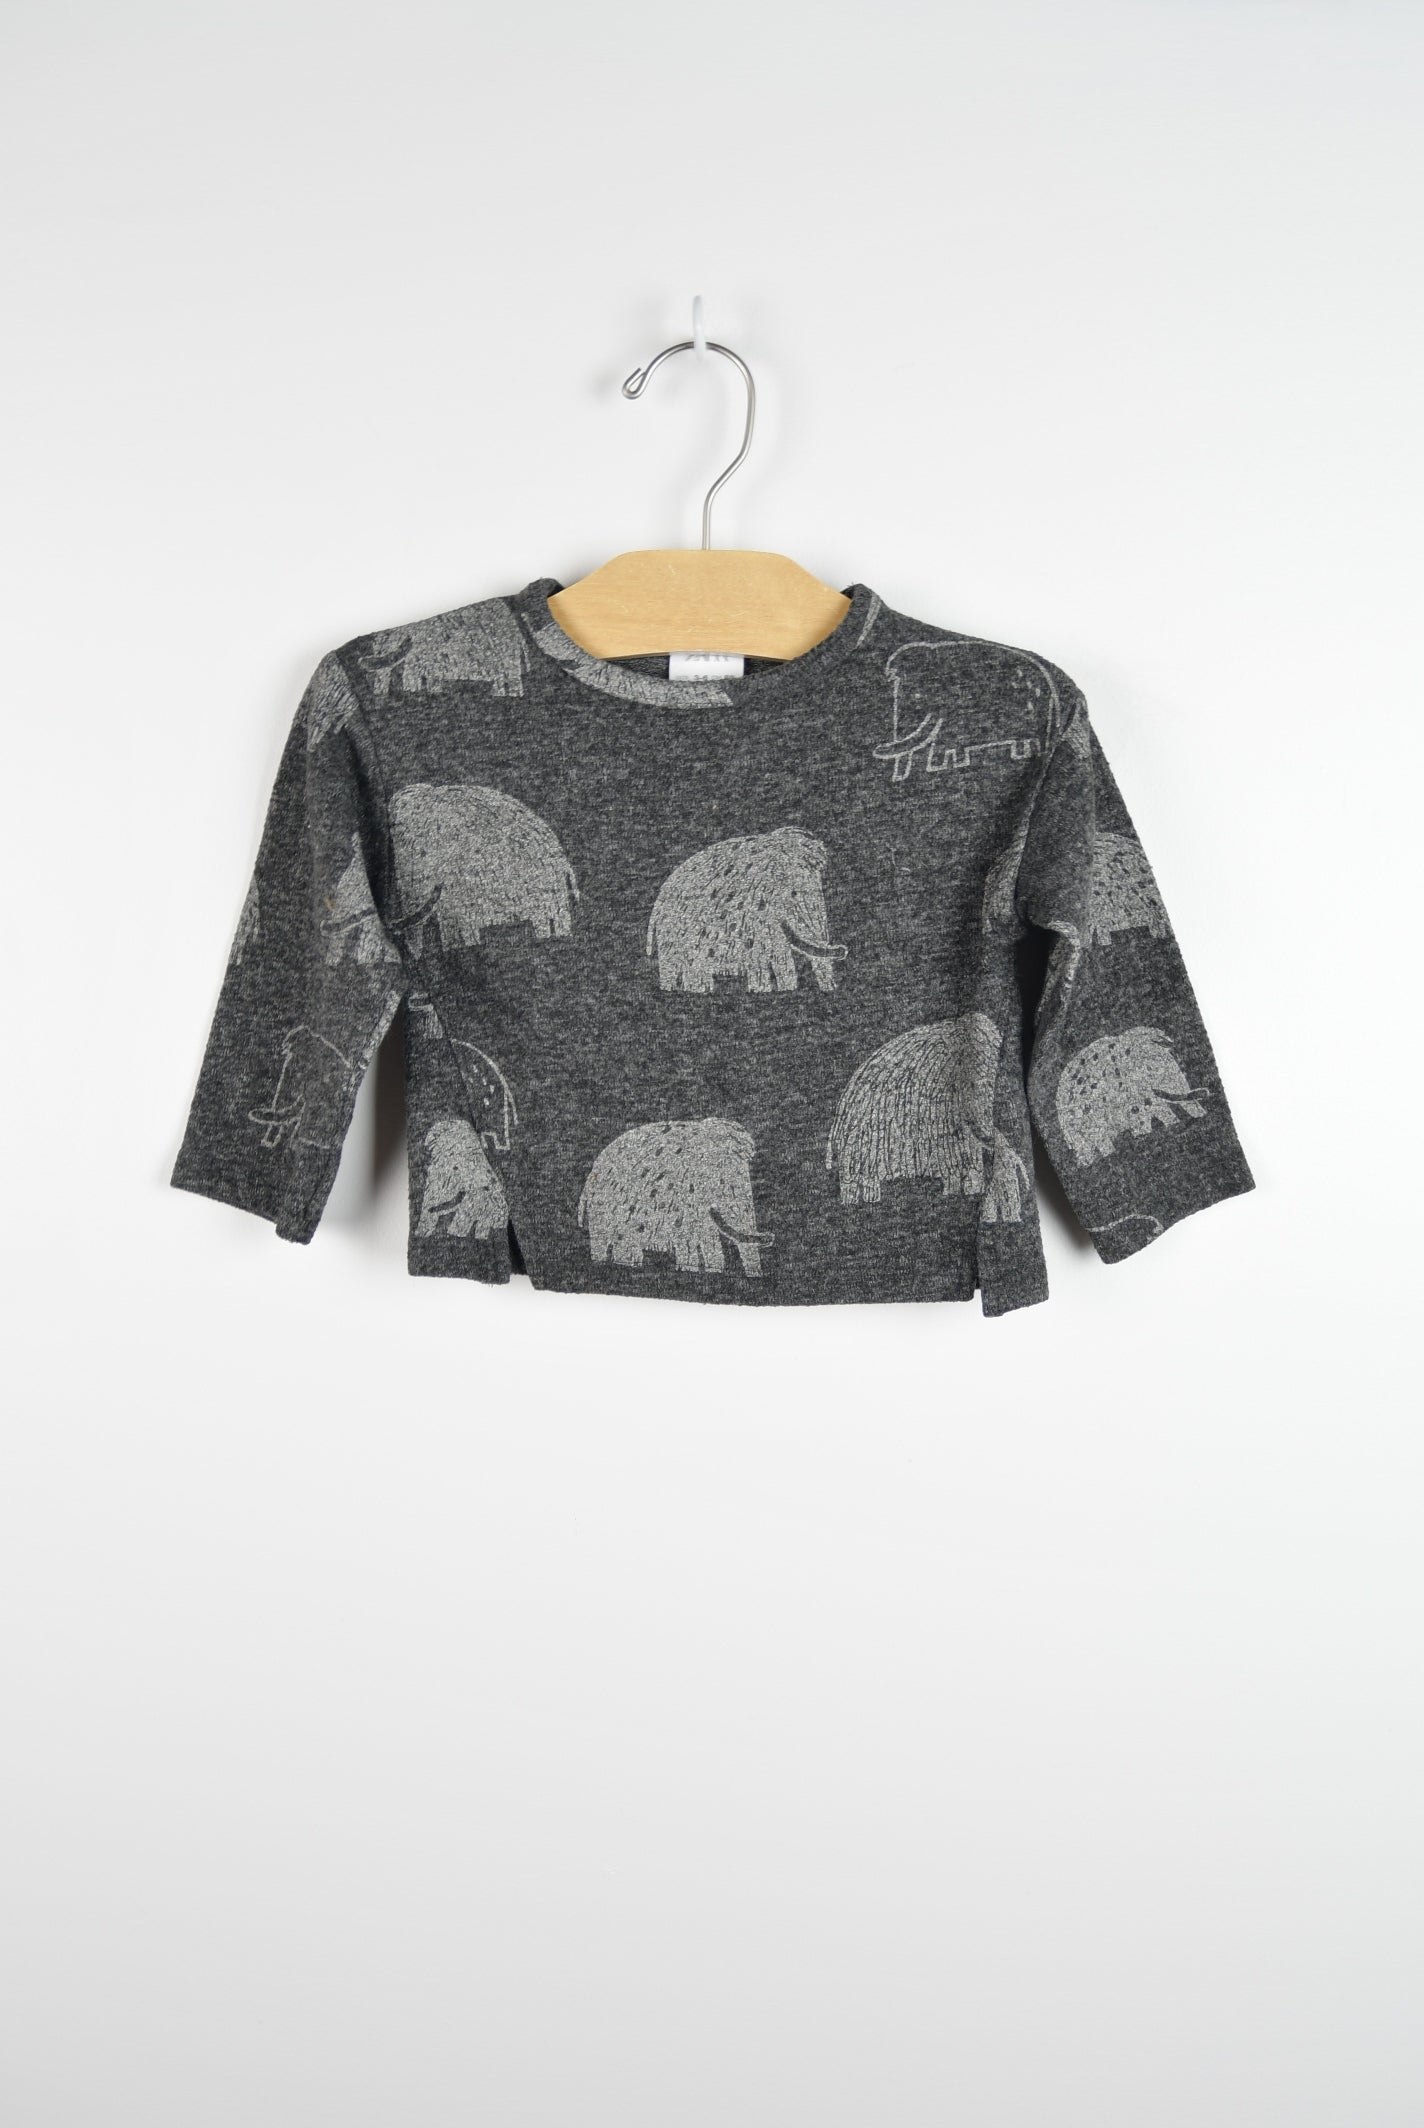 Zara Animal Print Sweater Shirt (3-6M)